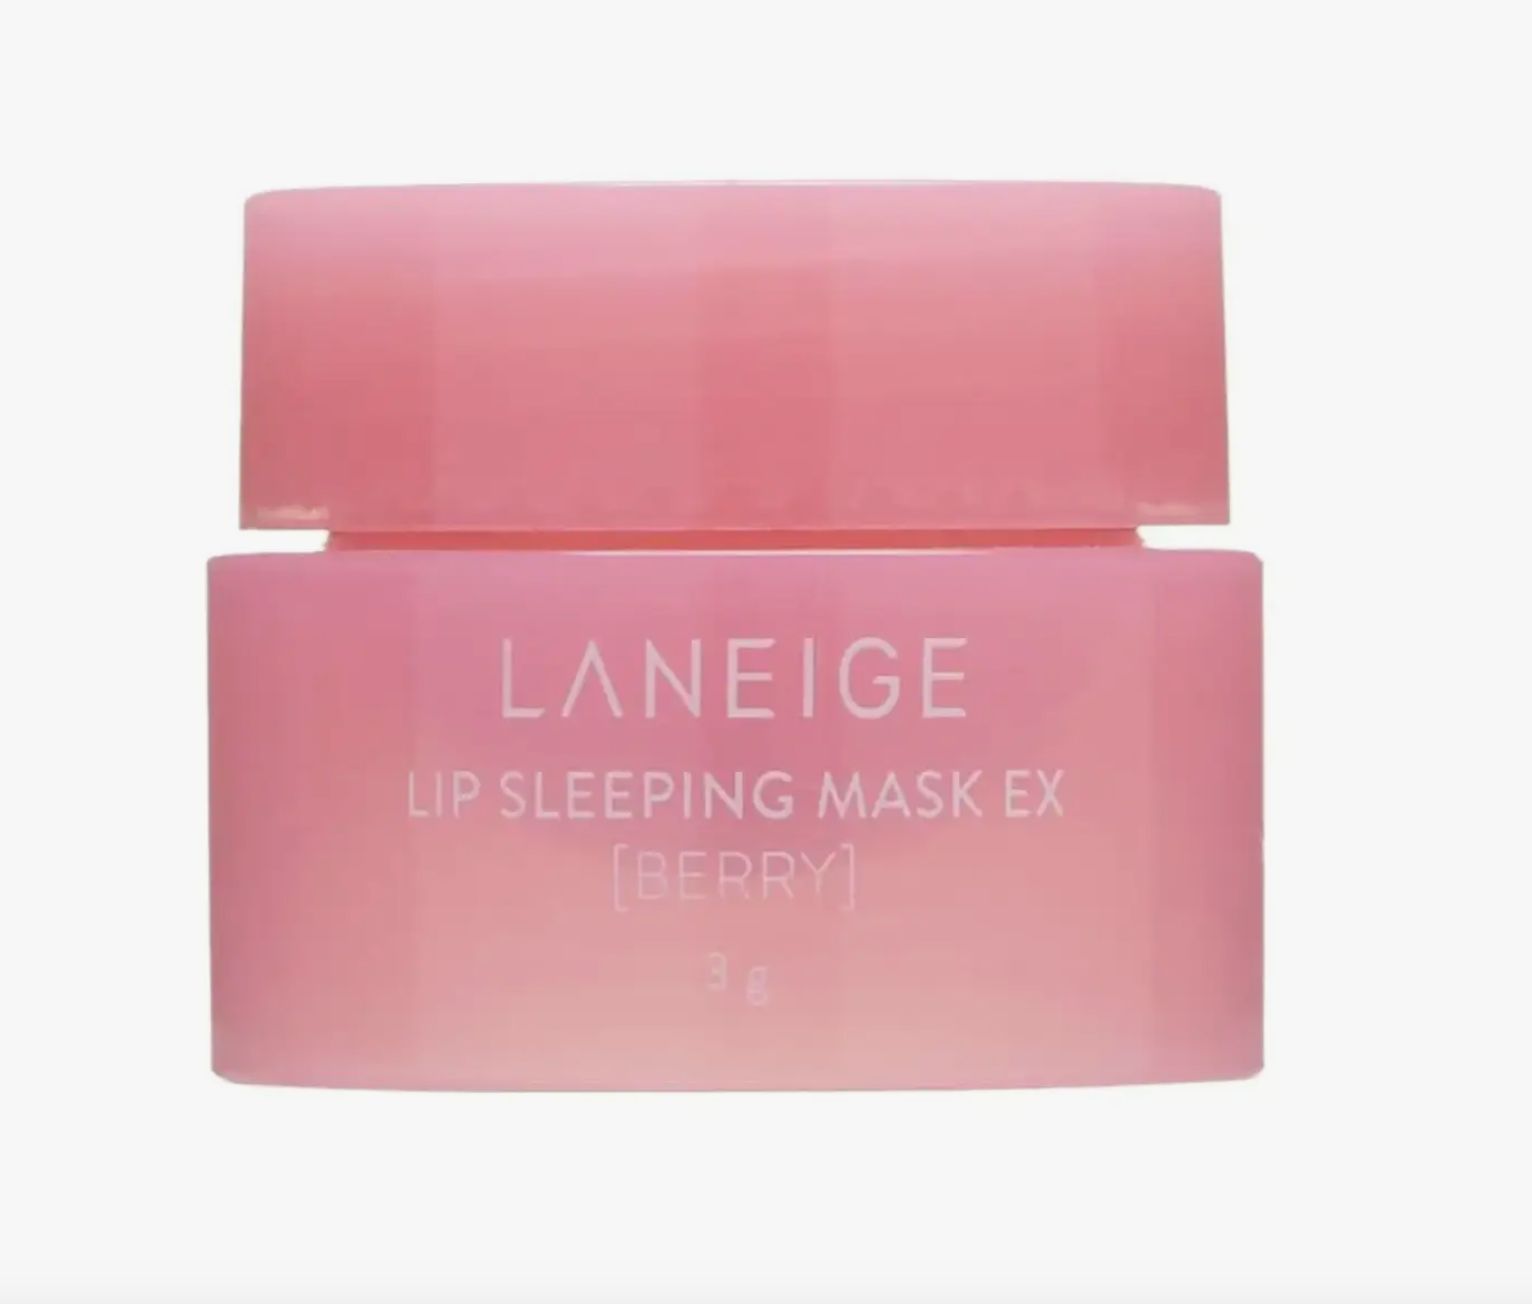 laneige mini berry lip sleeping mask